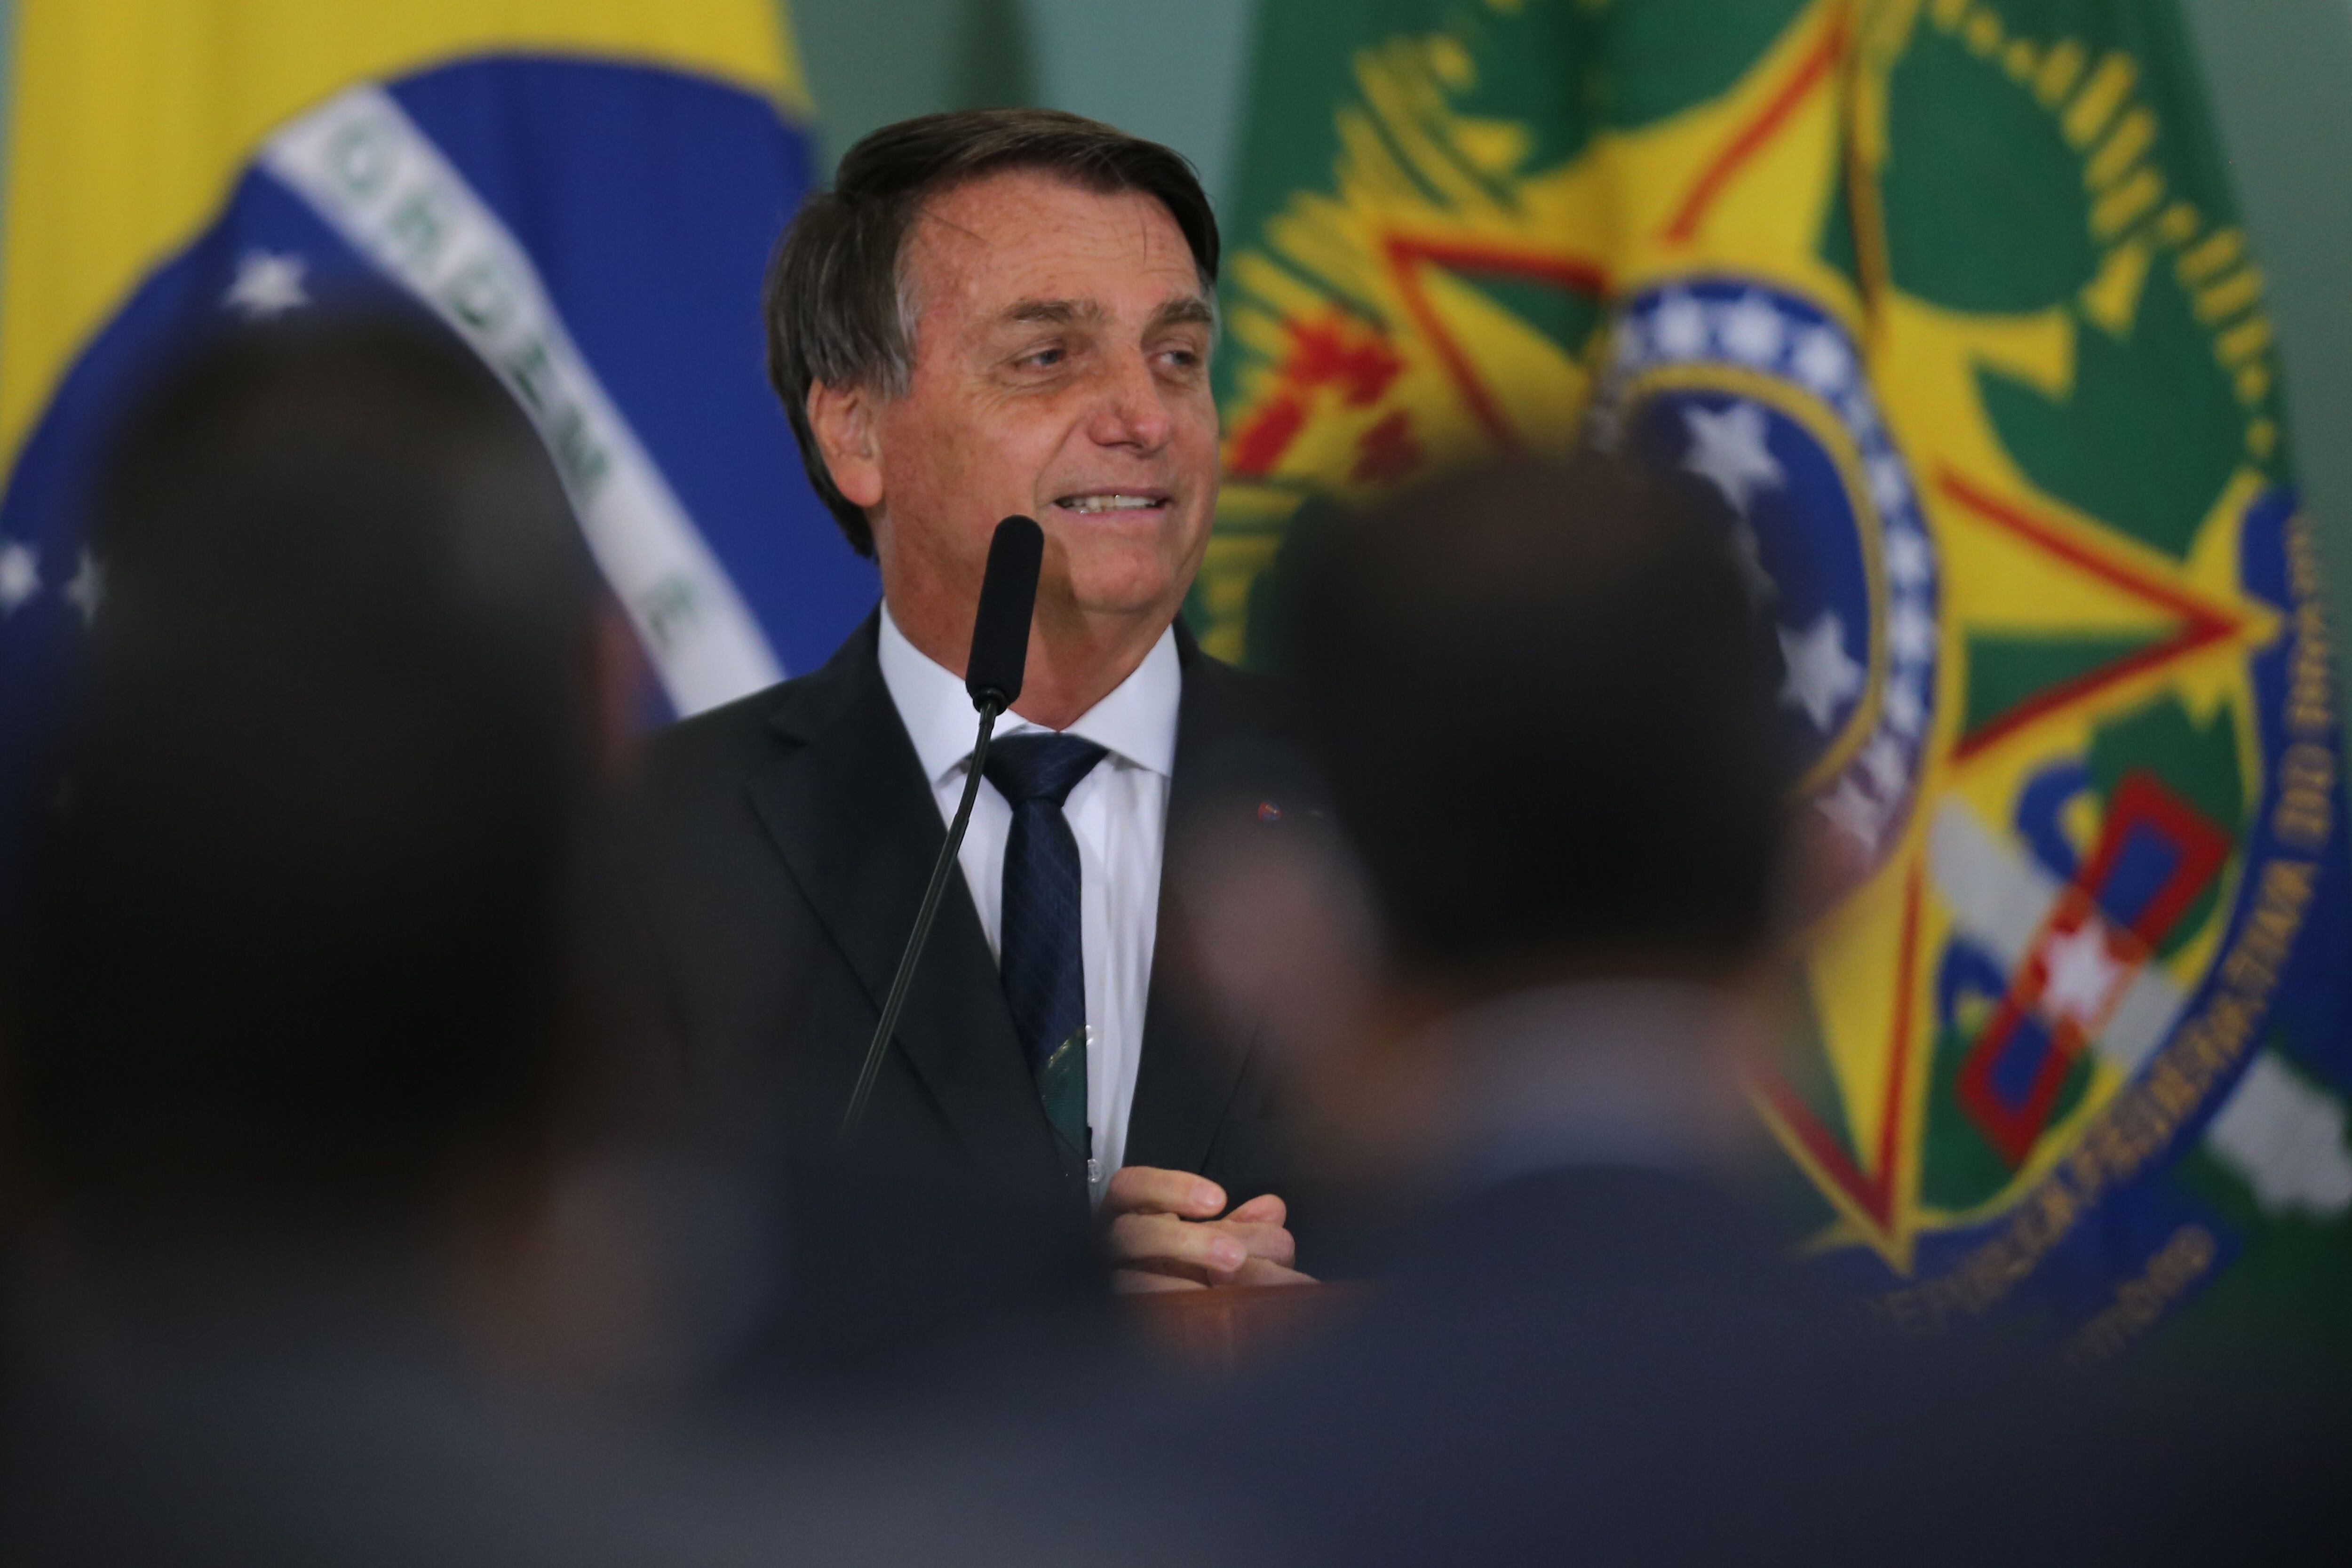 09/10/2020 El presidente de Brasil. Jair Bolsonaro. POLITICA SUDAMÉRICA BRASIL LATINOAMÉRICA INTERNACIONAL O GLOBO / ZUMA PRESS / CONTACTOPHOTO 